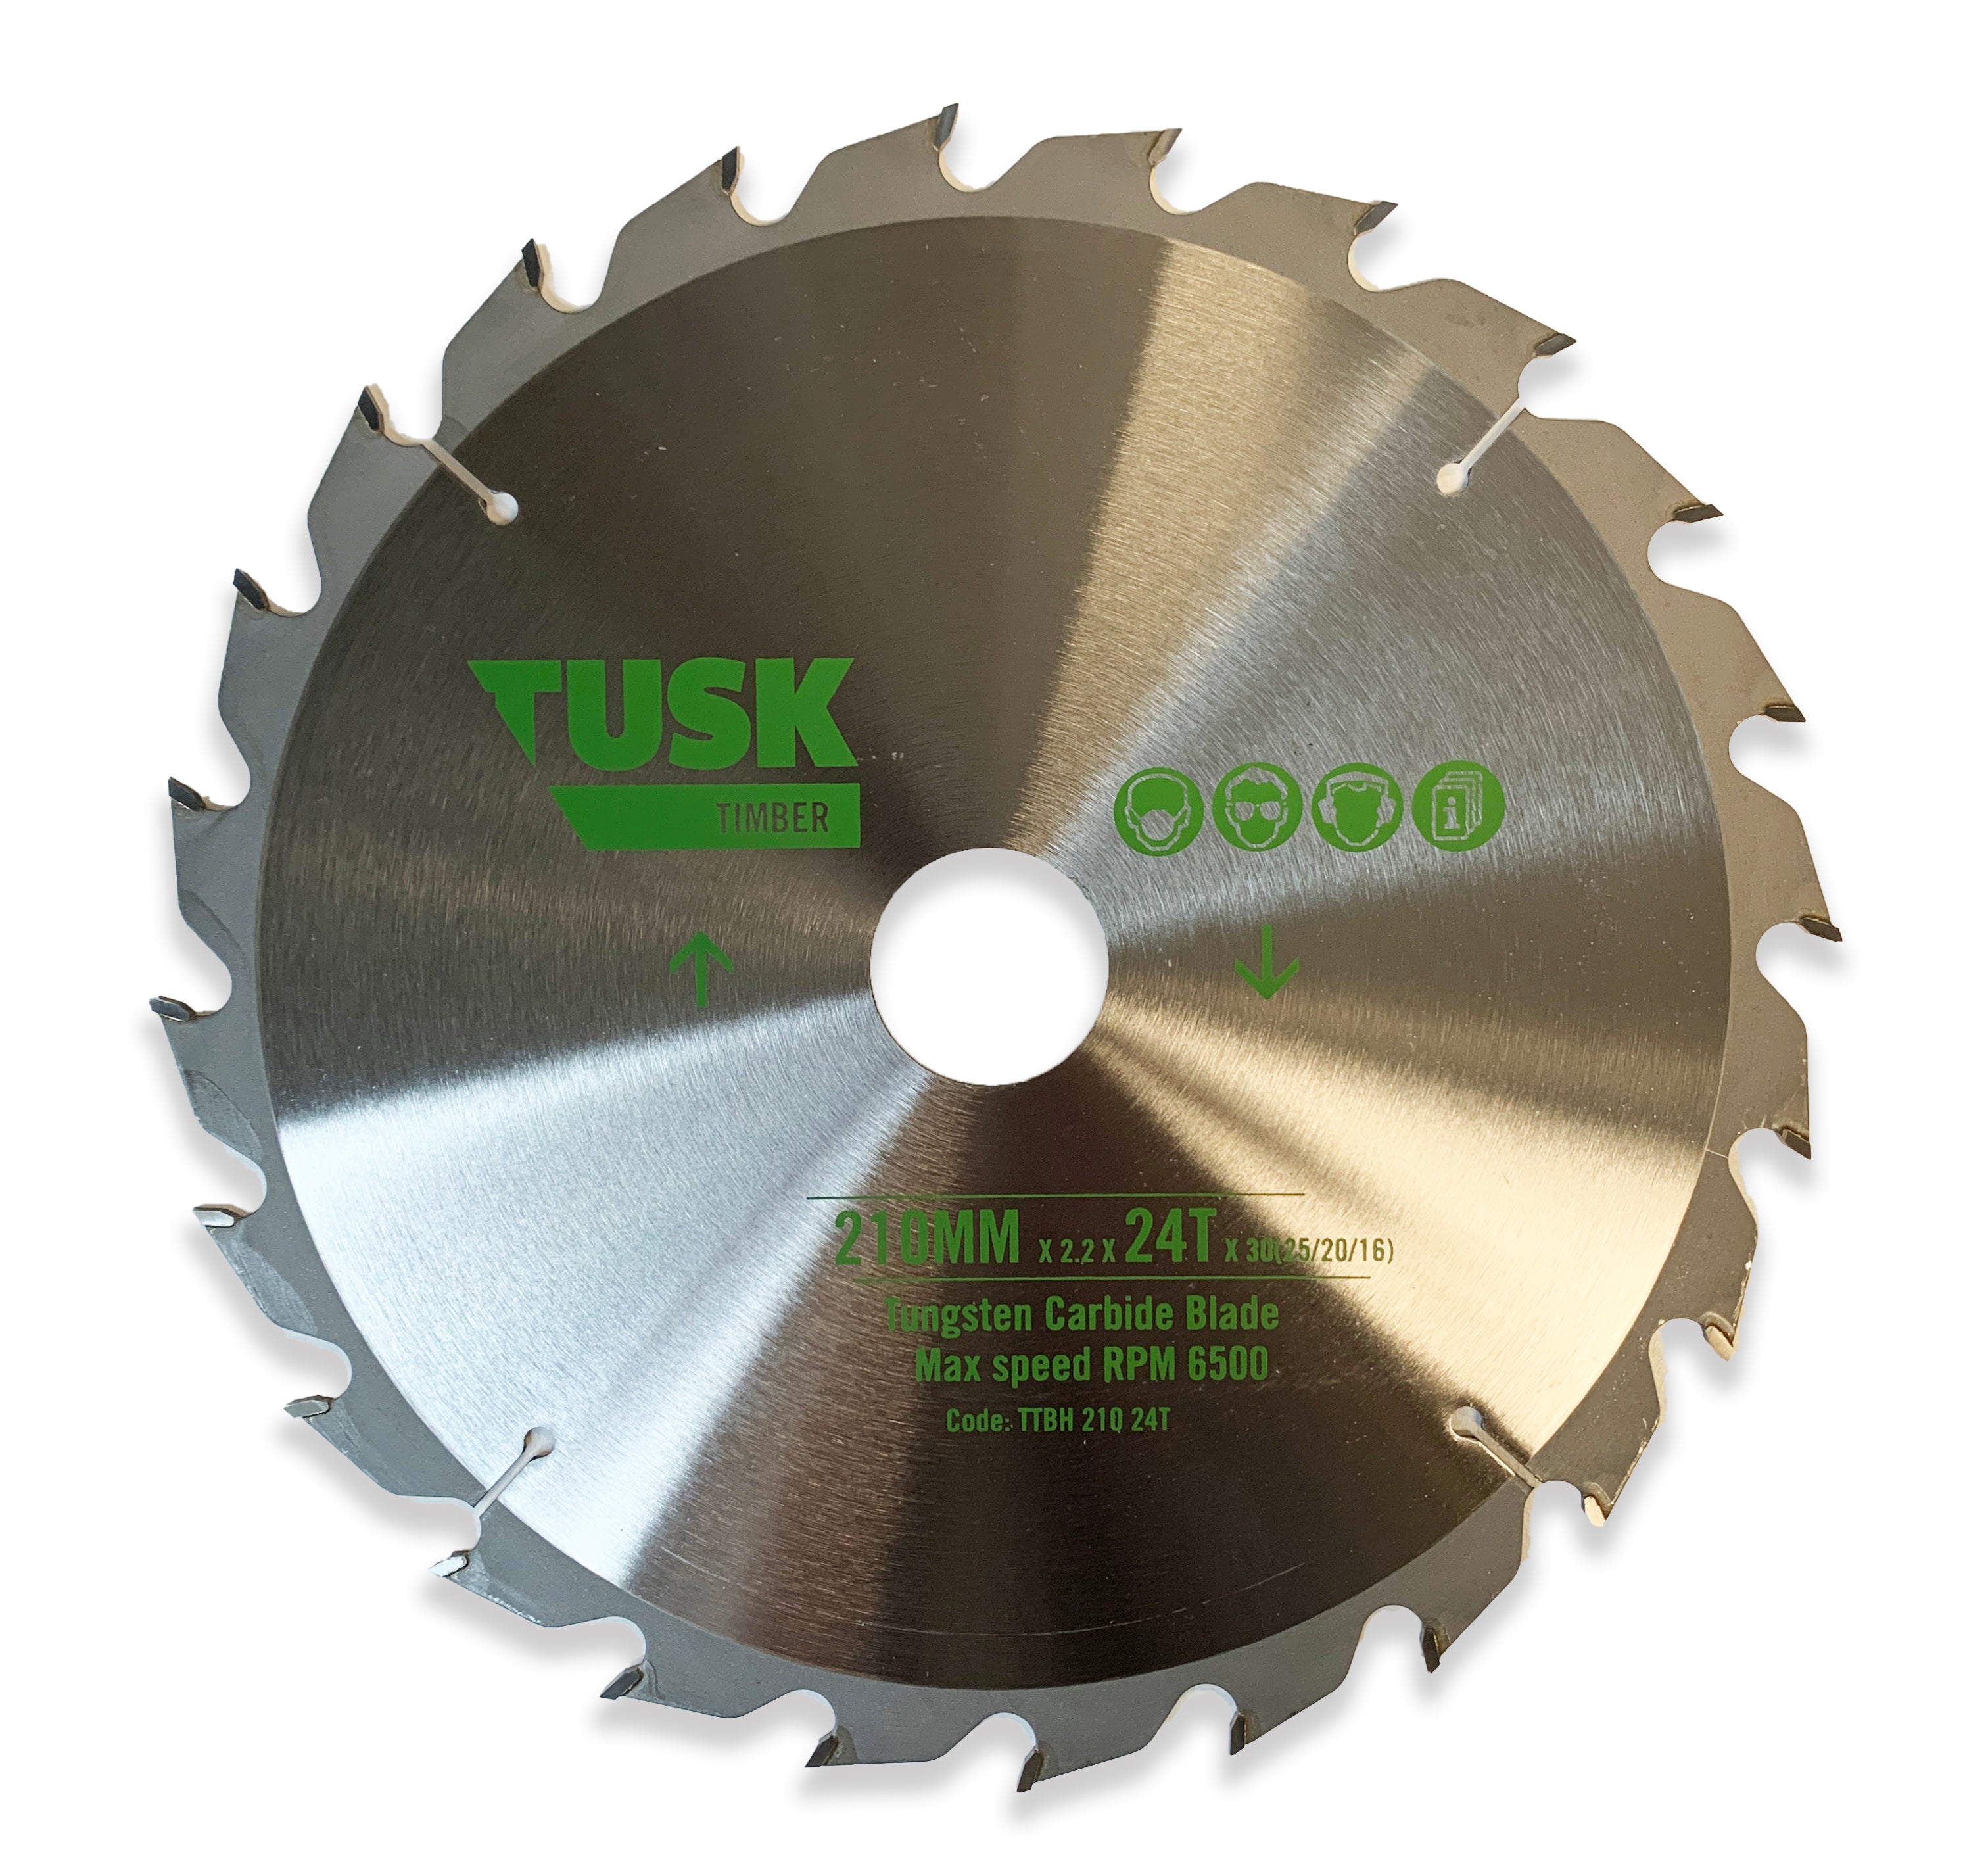 Tusk Timber Tungsten Carbide Blades - 210 X 2.2/1.4 X 40T X 30 (25/20/16)